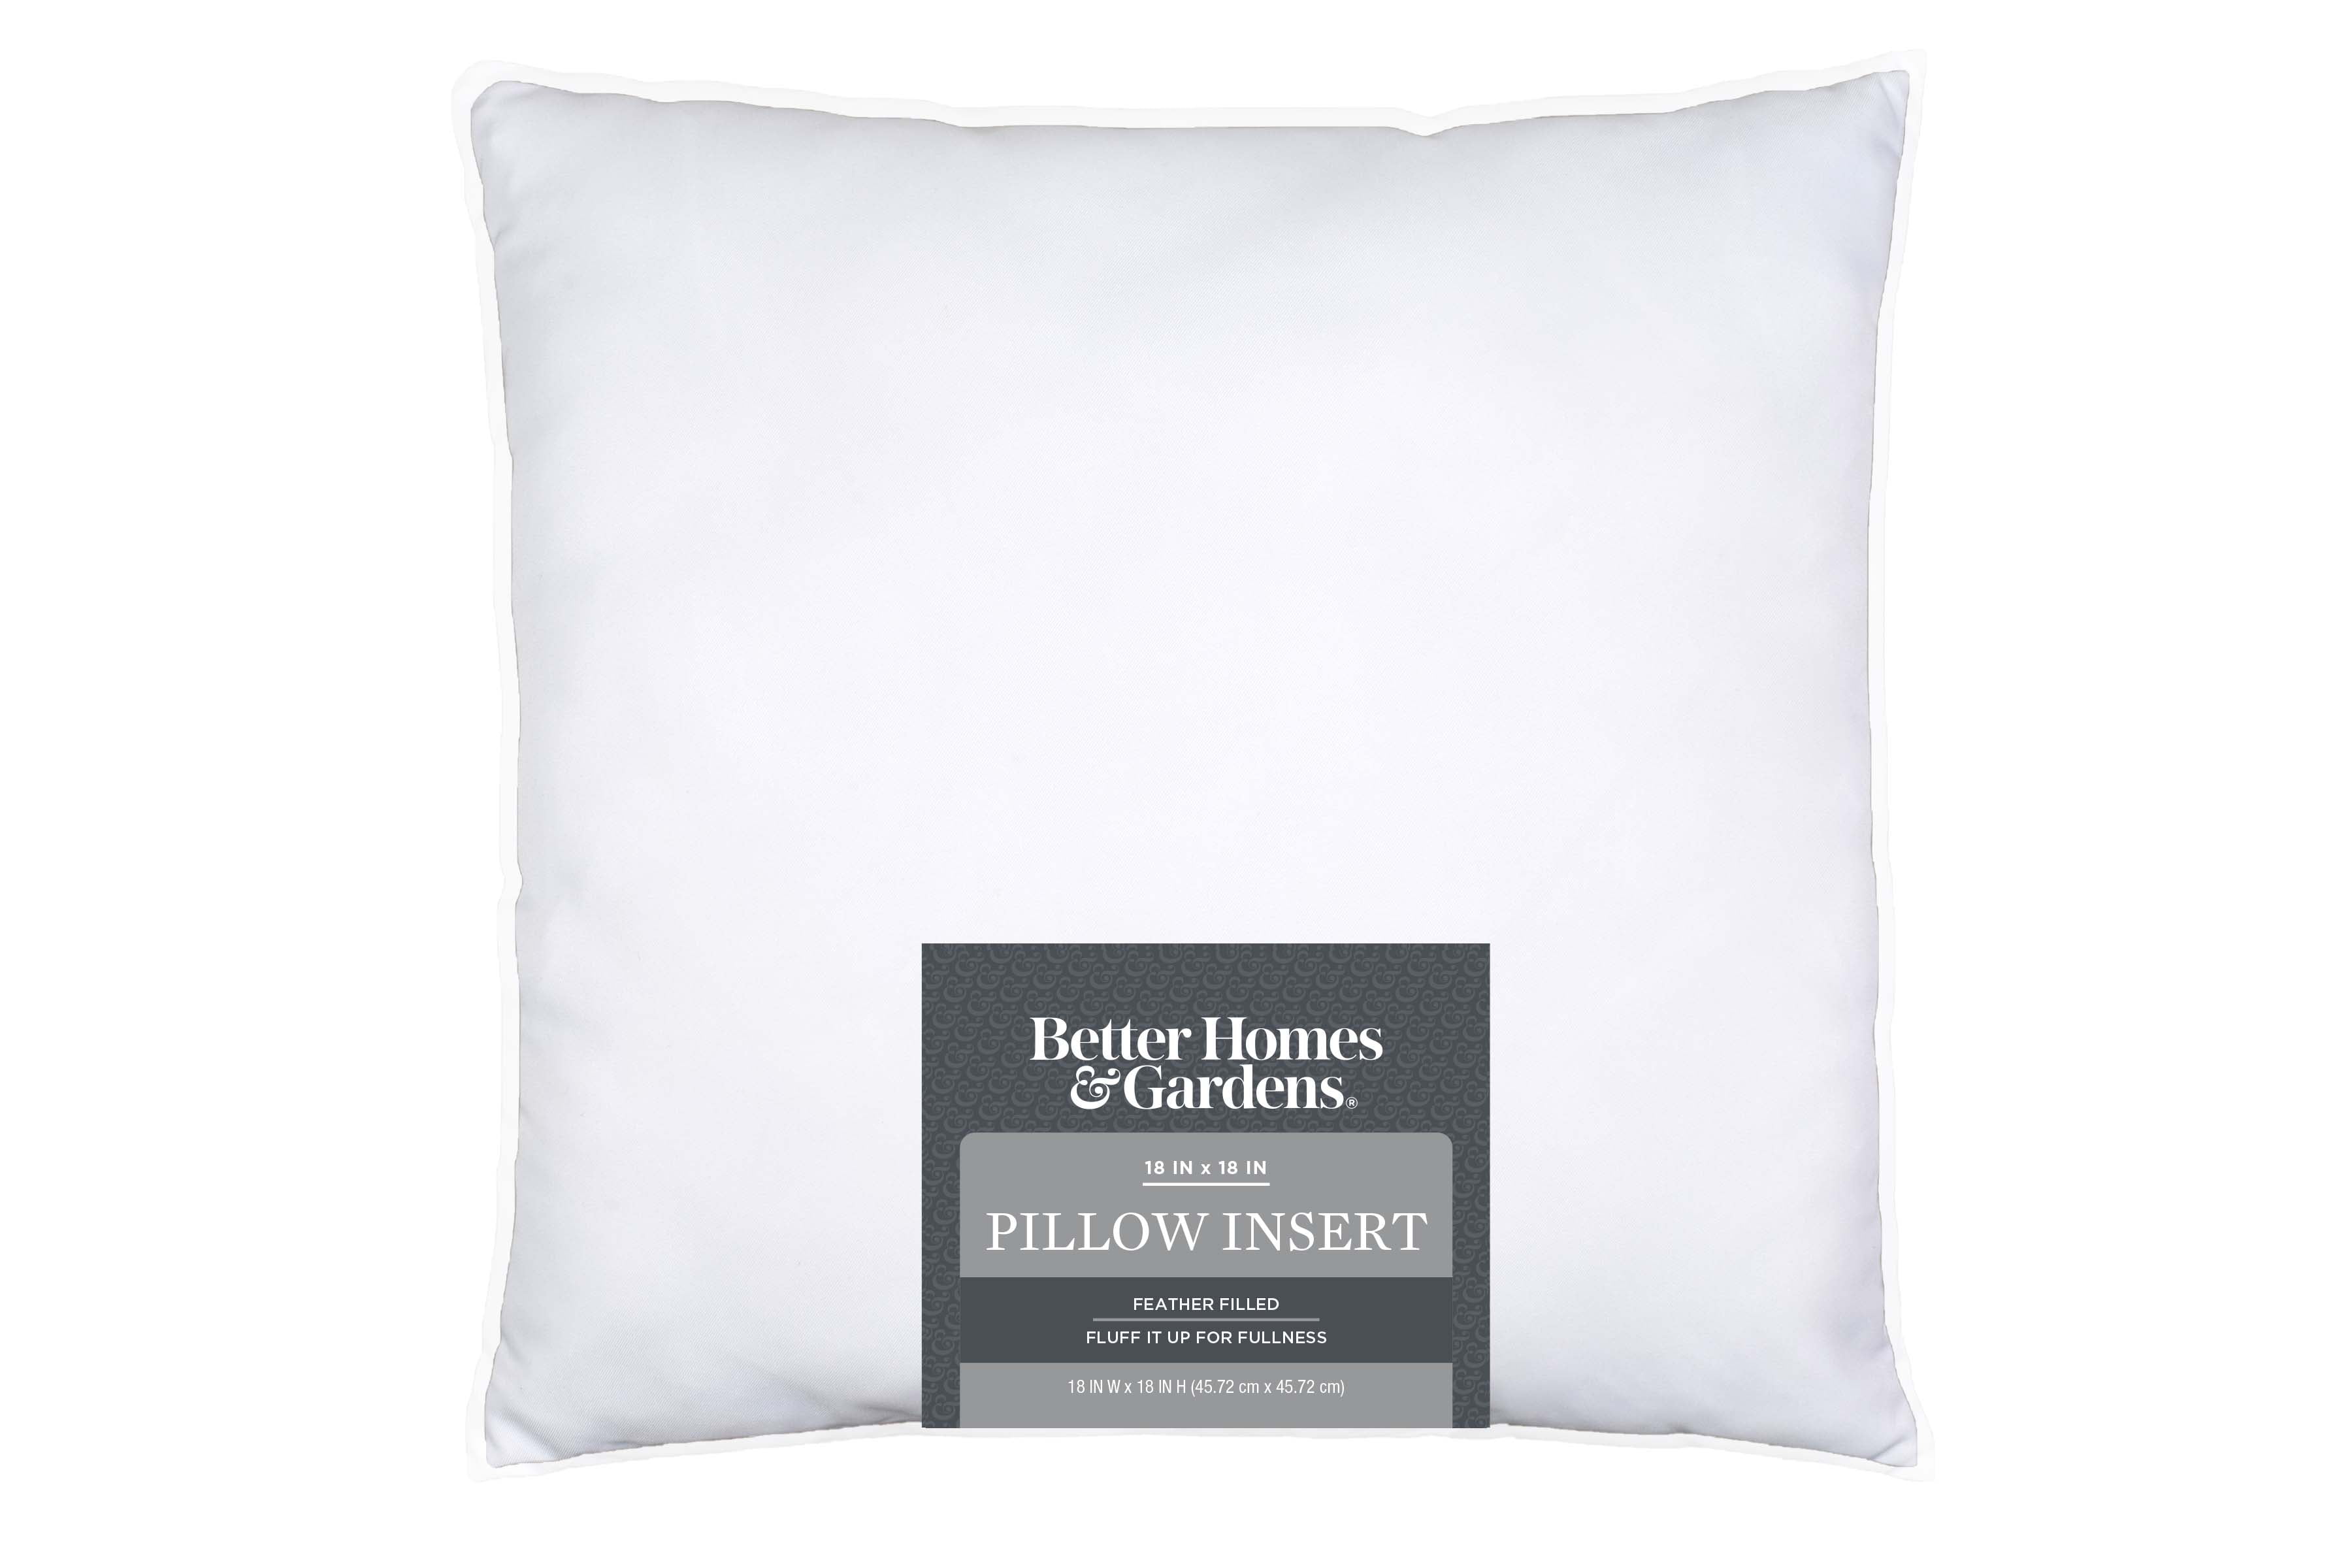 Pellon Decorative Pillow Insert Twin Pack 18inx18in